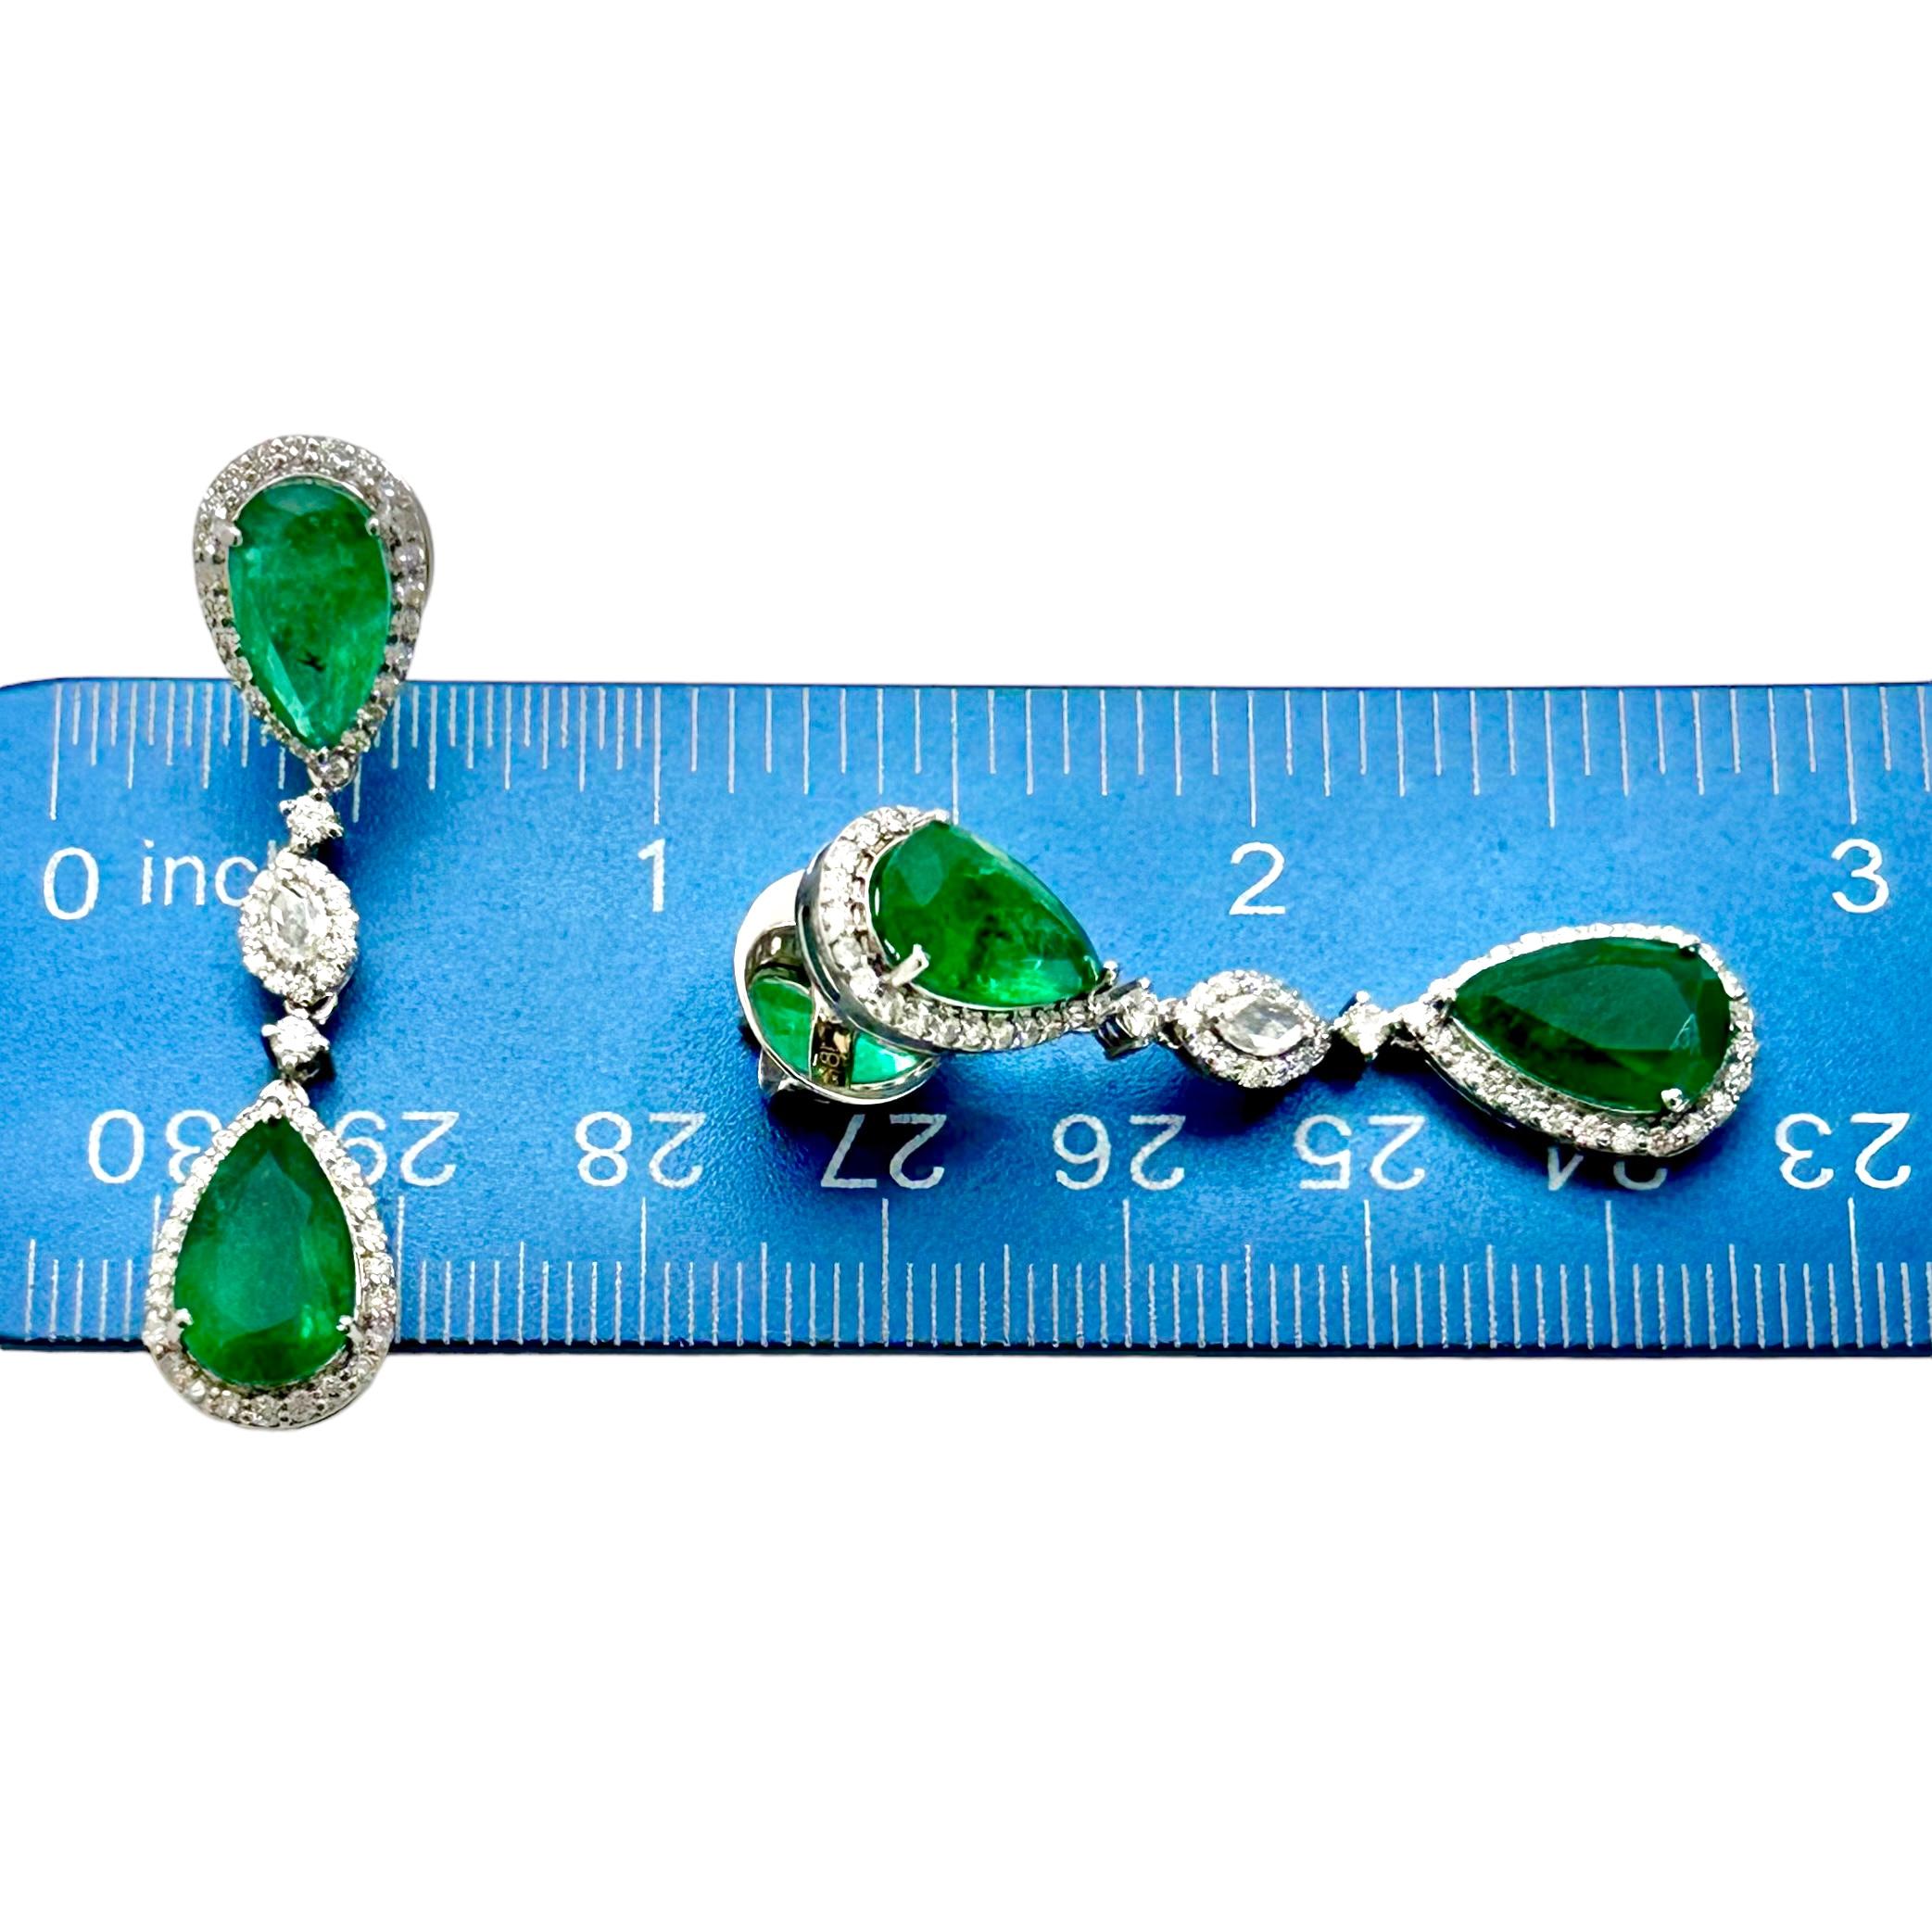 Women's 18k White Gold Pear Shaped Emerald and Diamond Drop Earrings